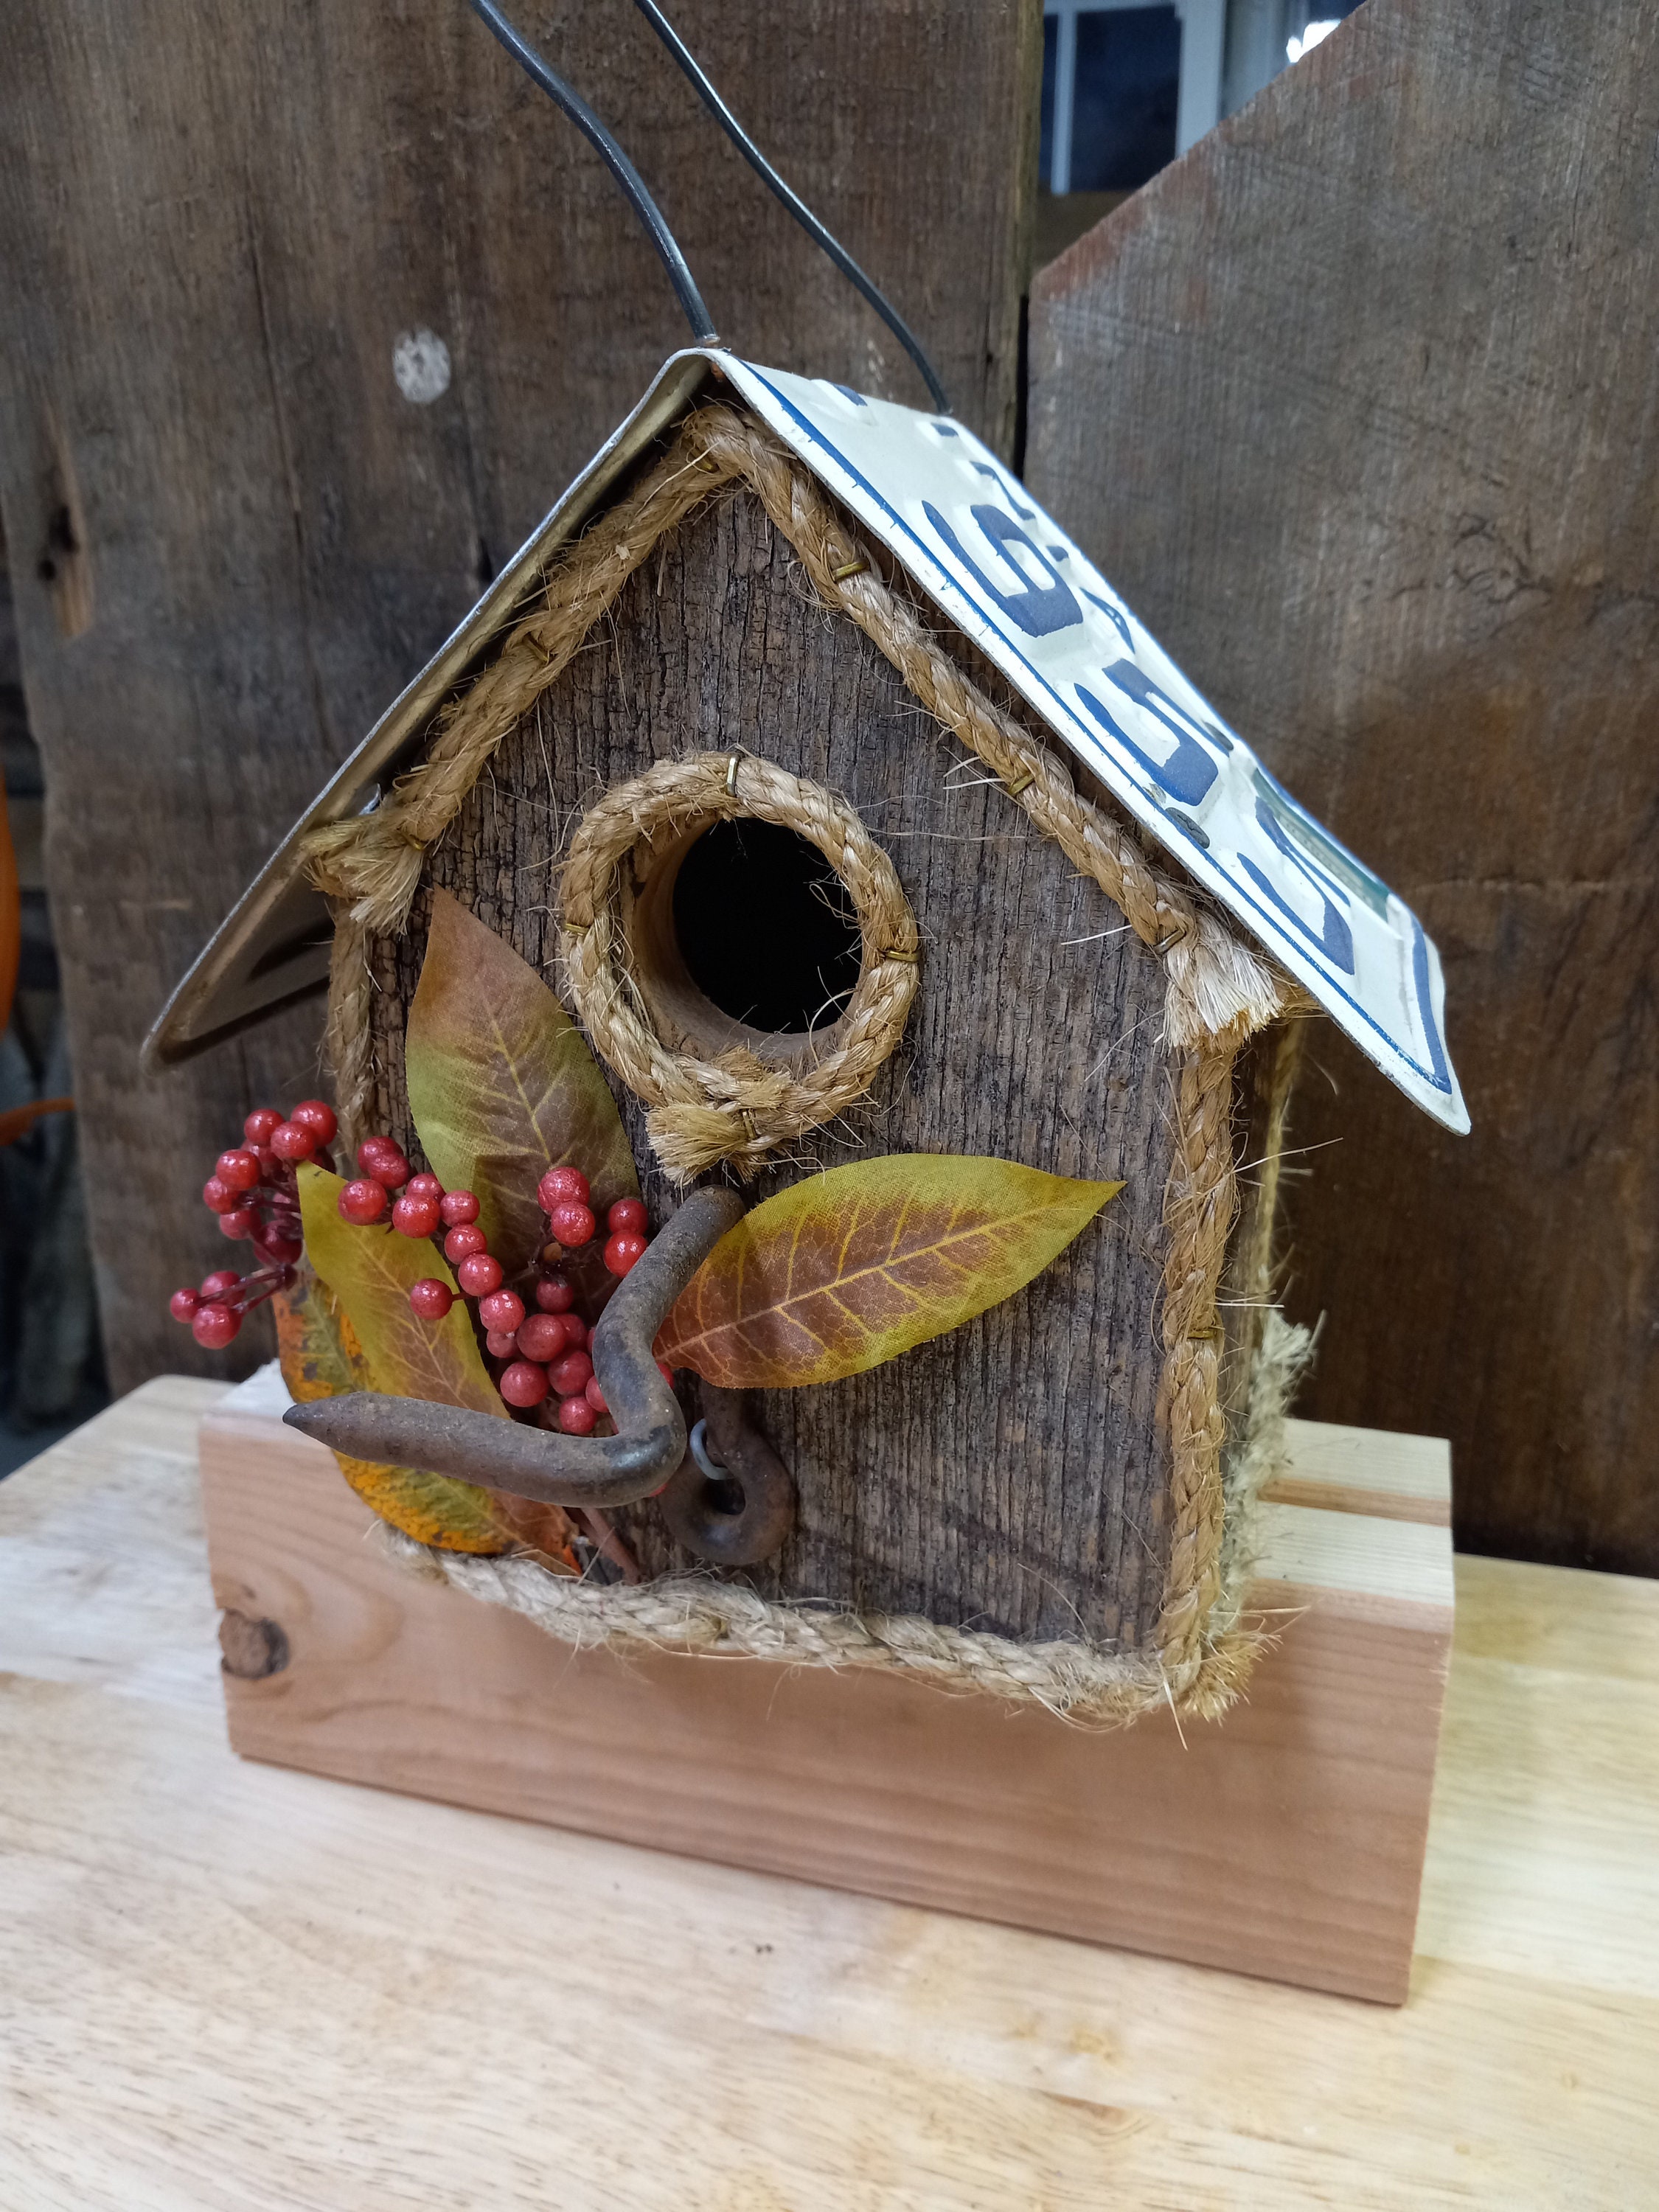 Mini Maison D'oiseau Nid Maison D'oiseau En Bois Boîte Nichoir En Plein Air